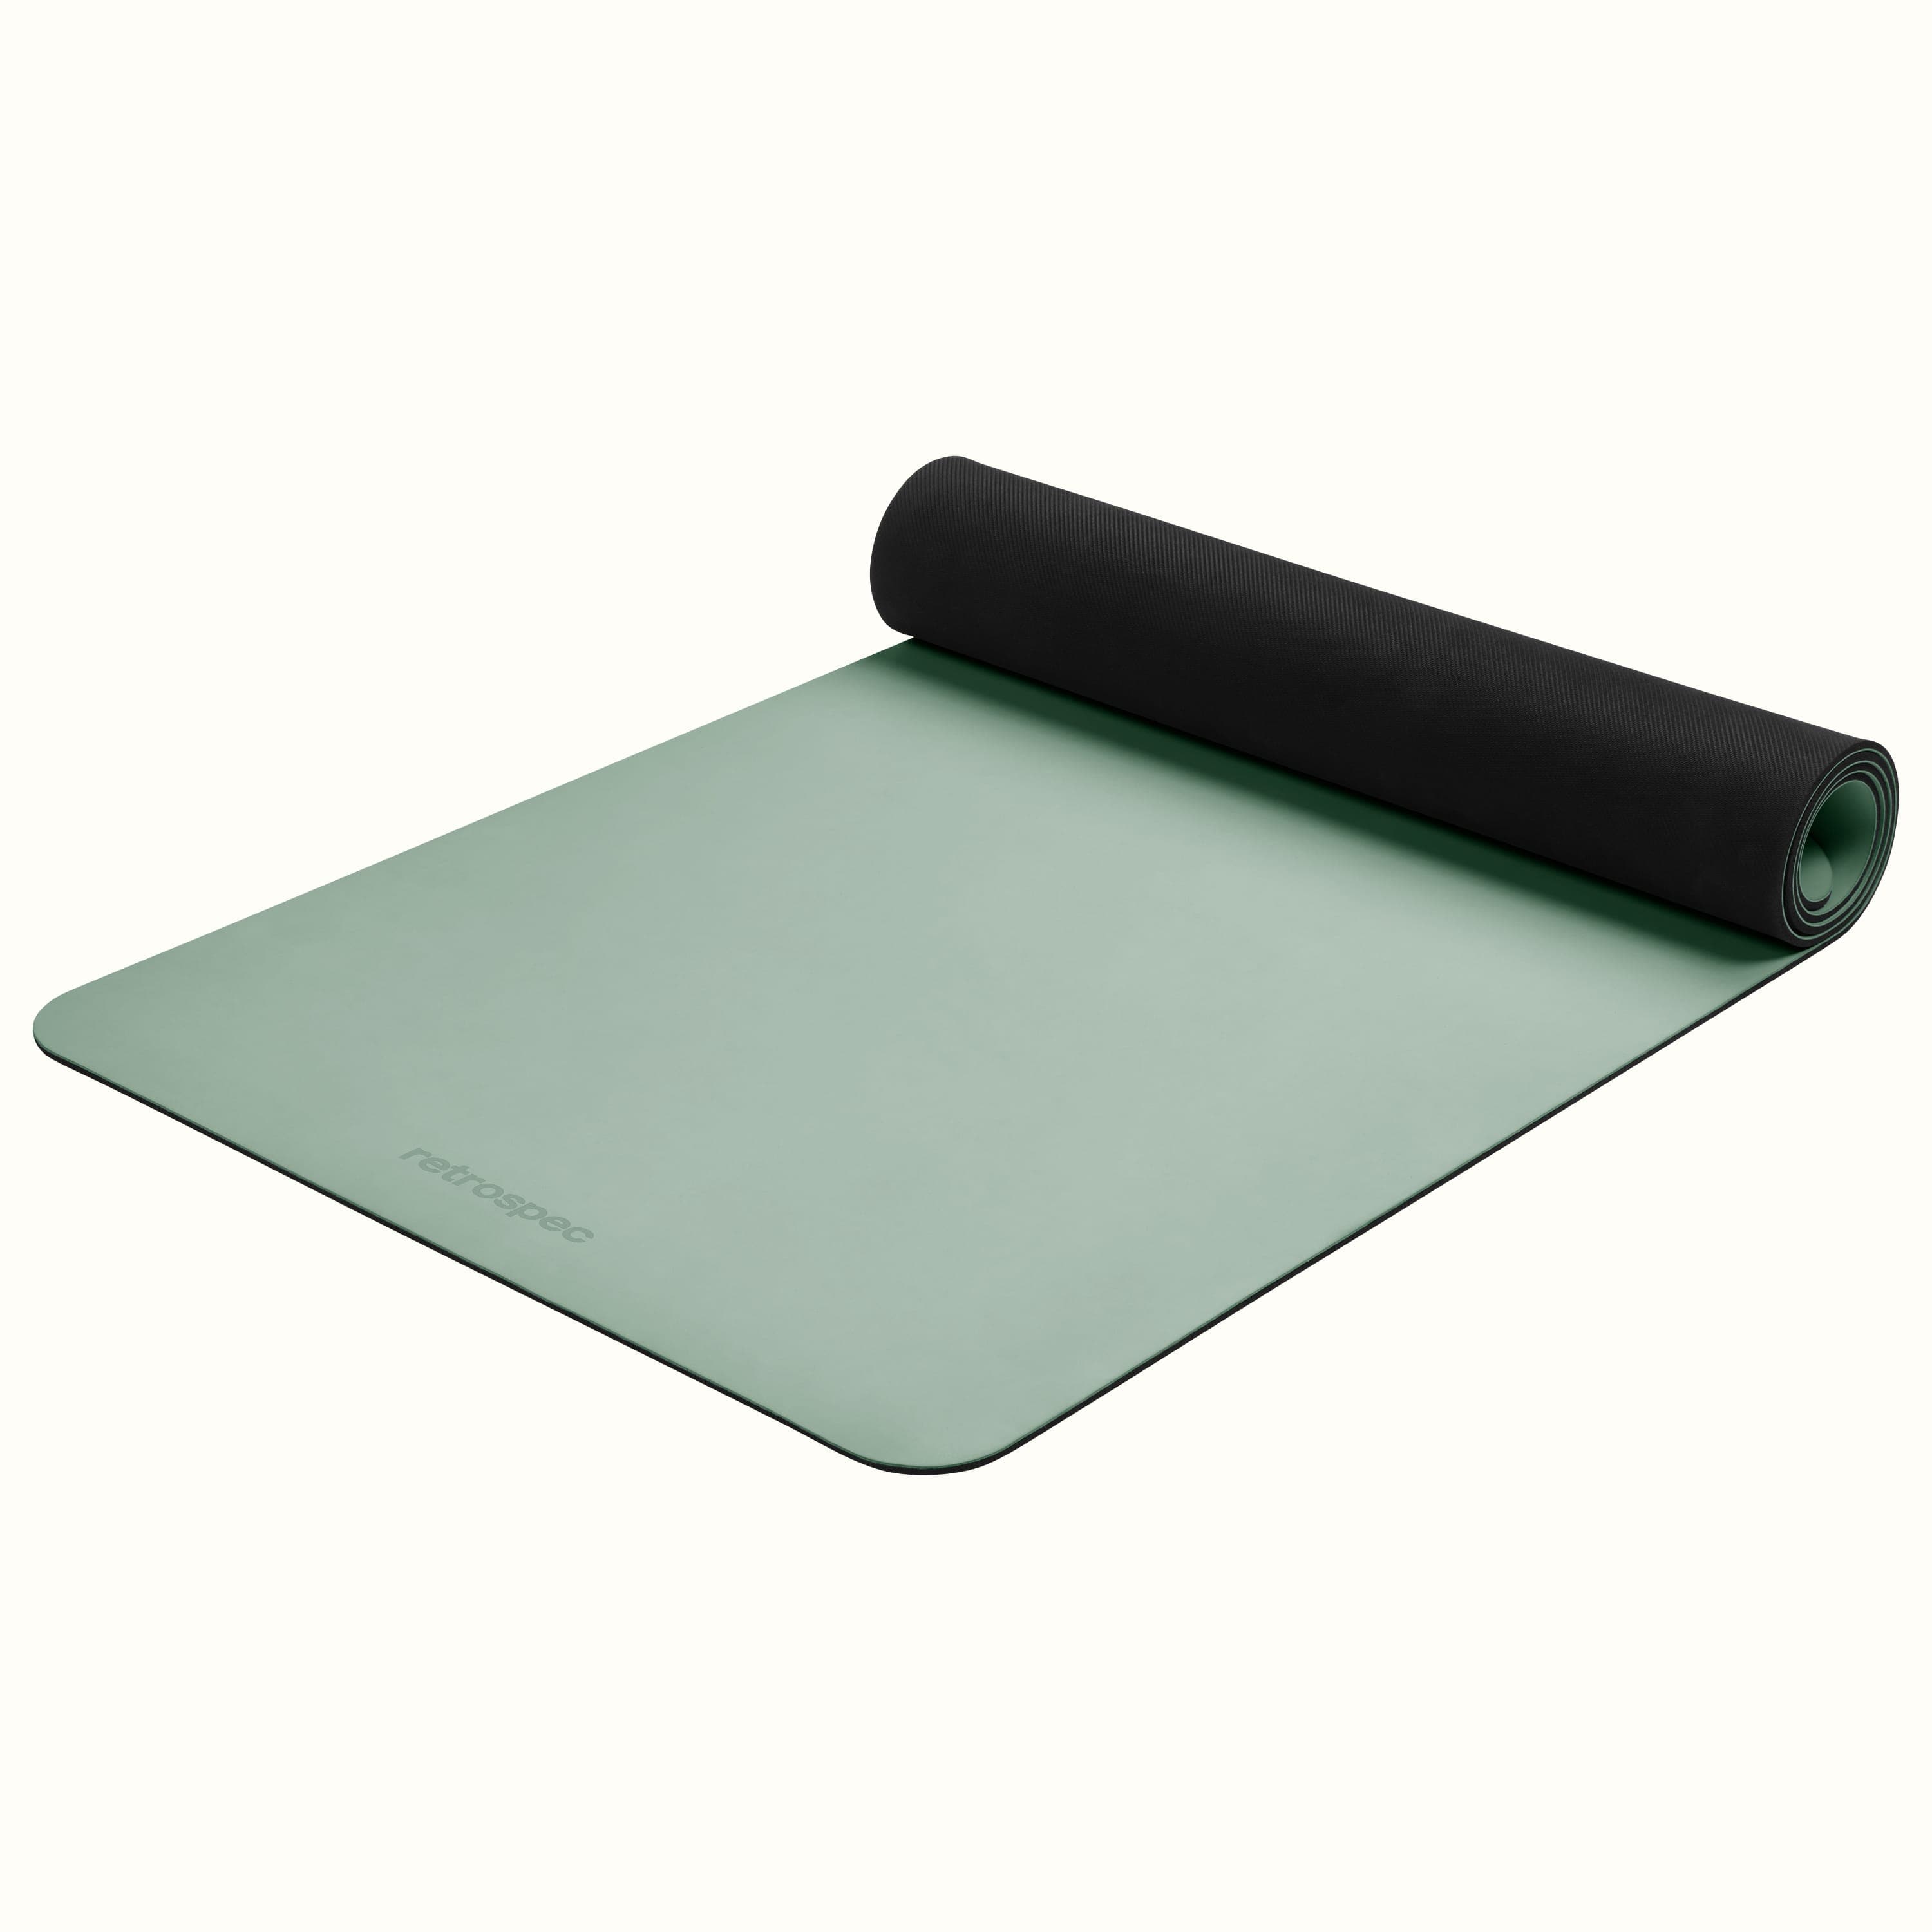 Reusable Yoga Mat, Foldable Exercise Yoga Mat